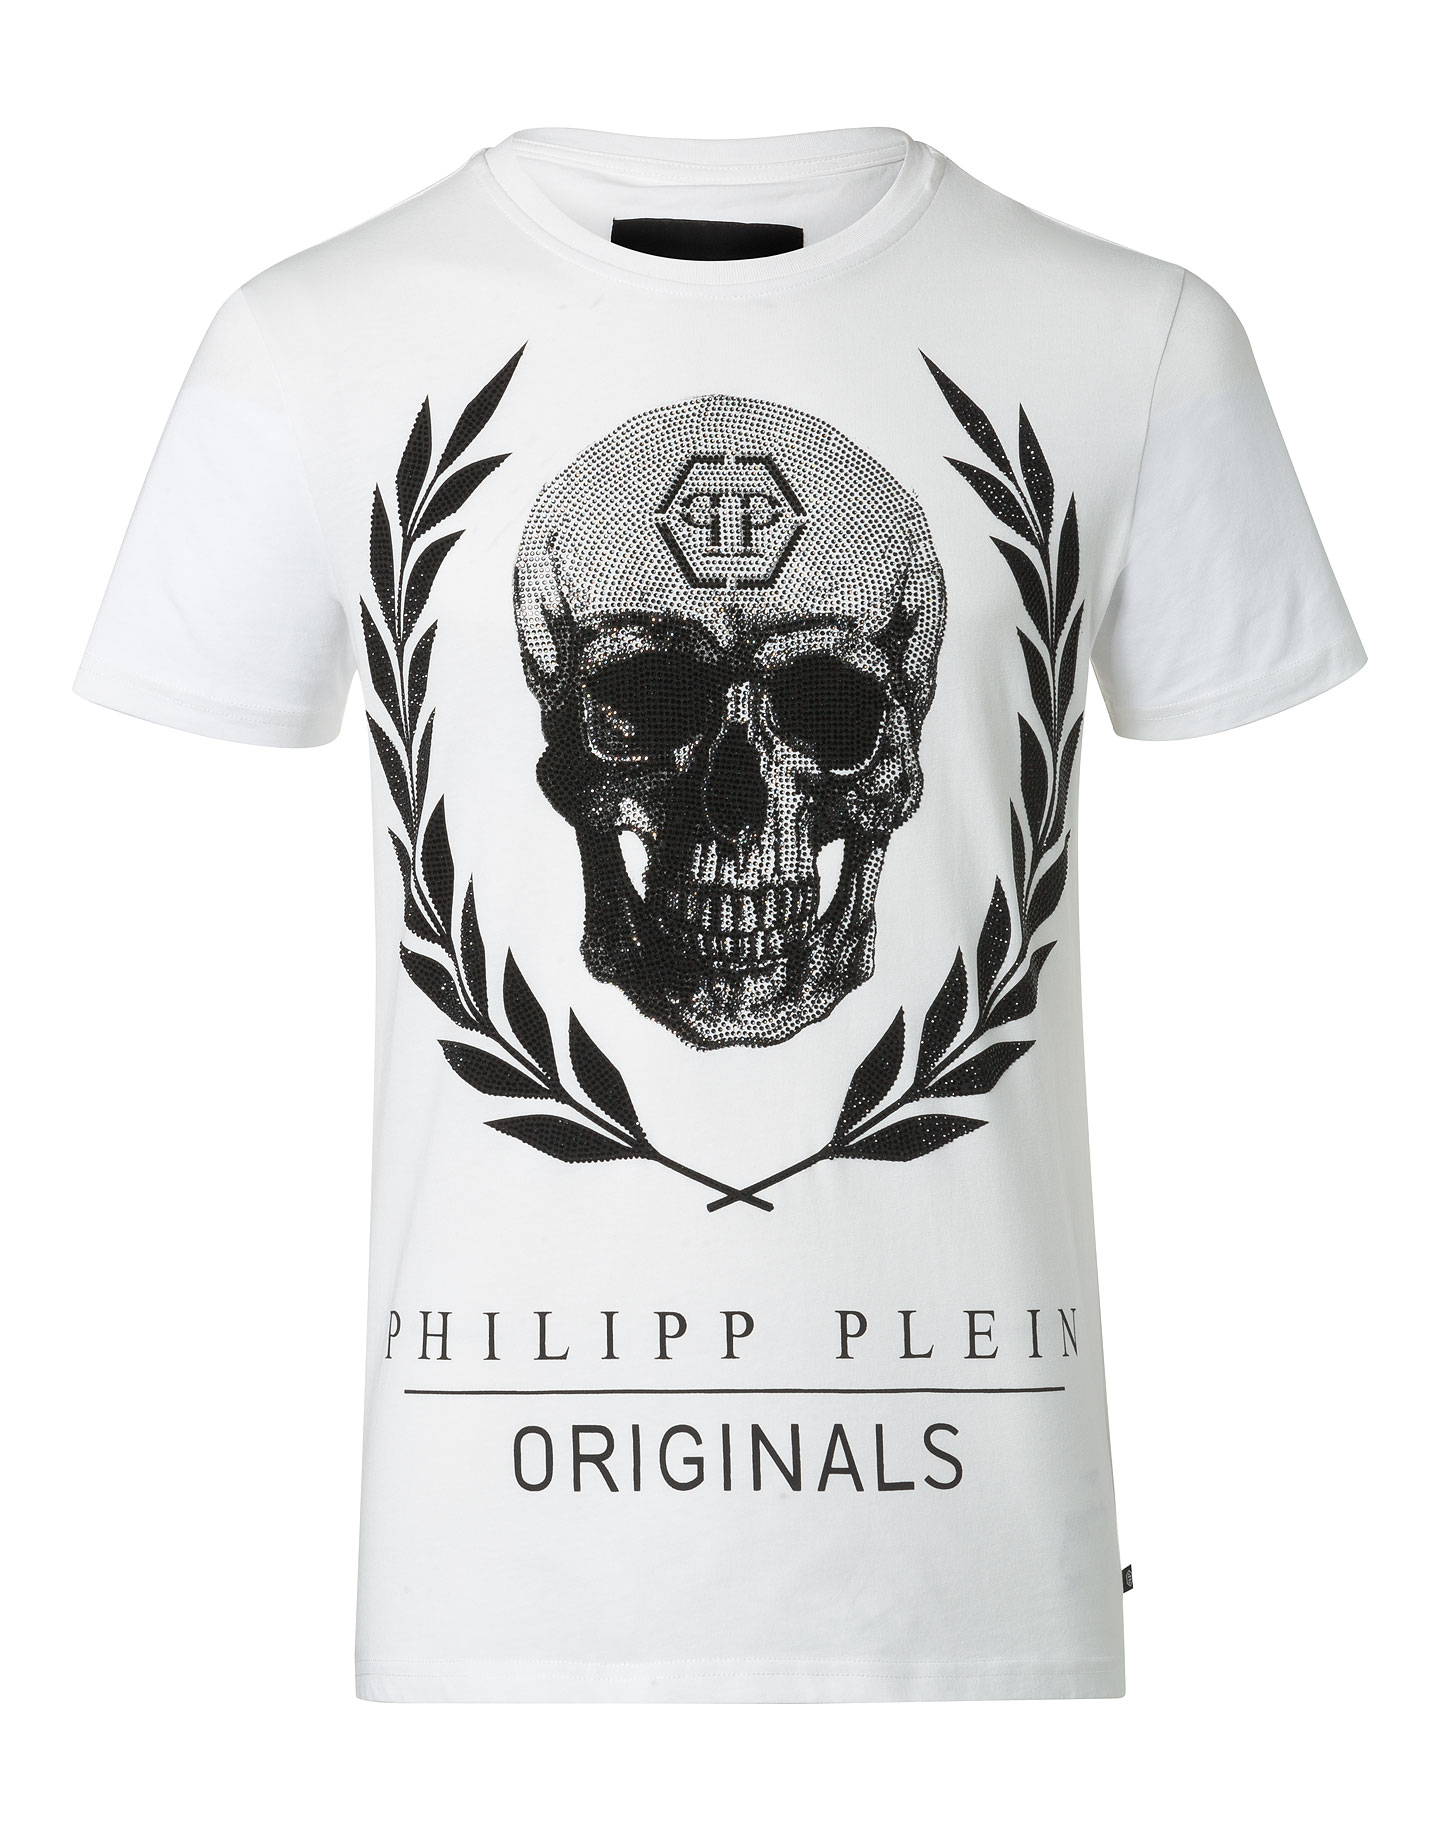 philipp plein t shirt original